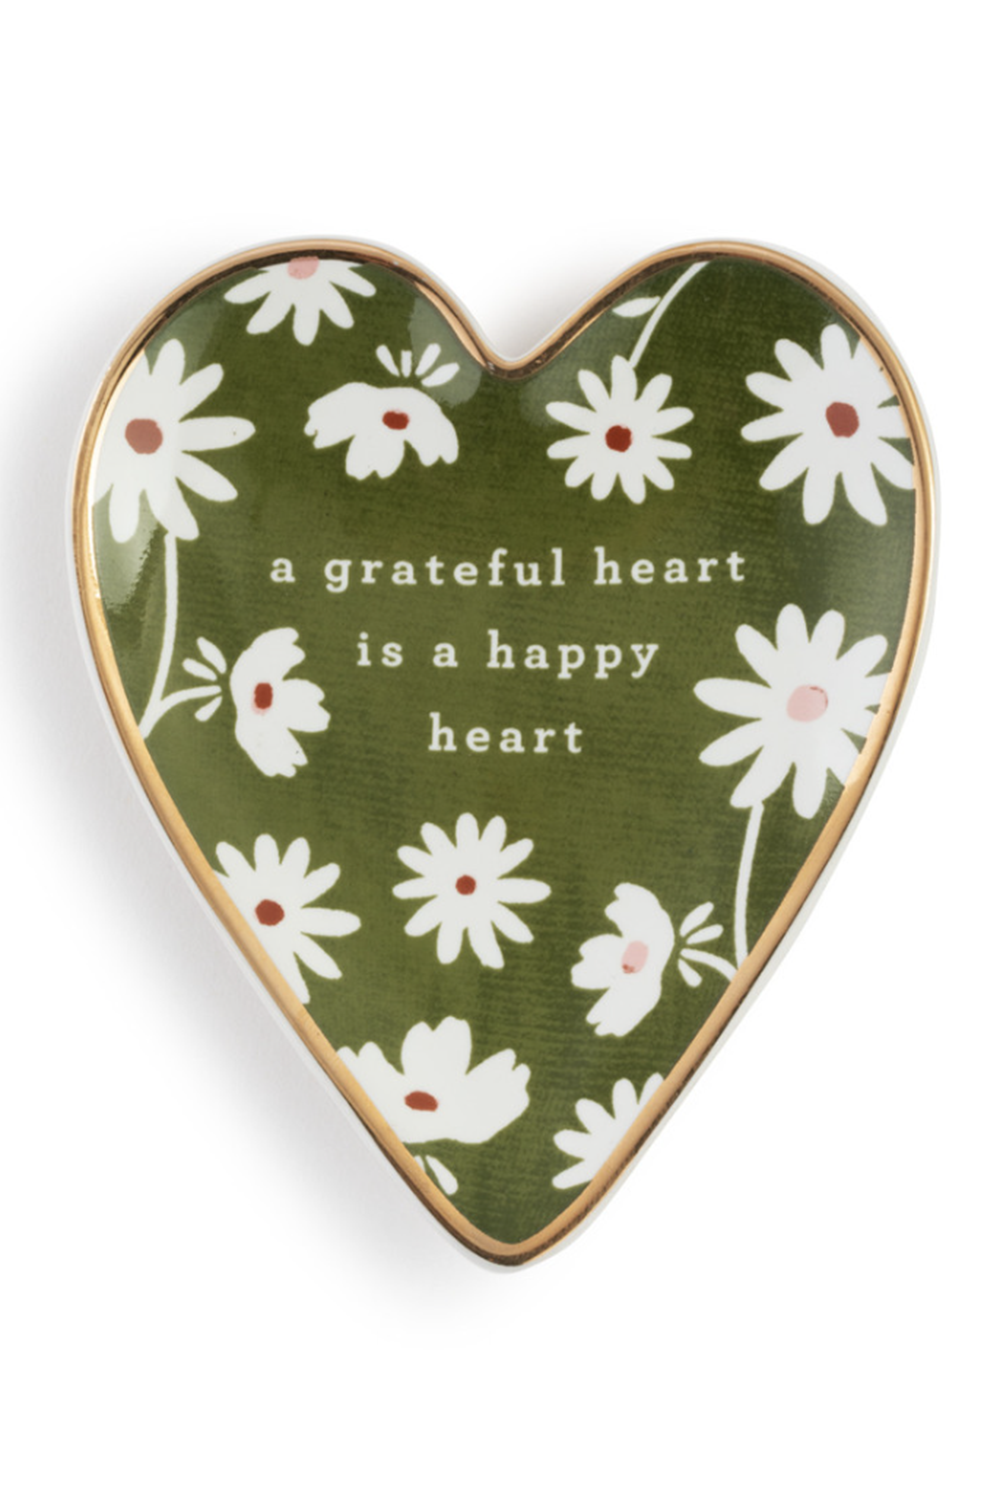 Heart Trinket Dish - Grateful